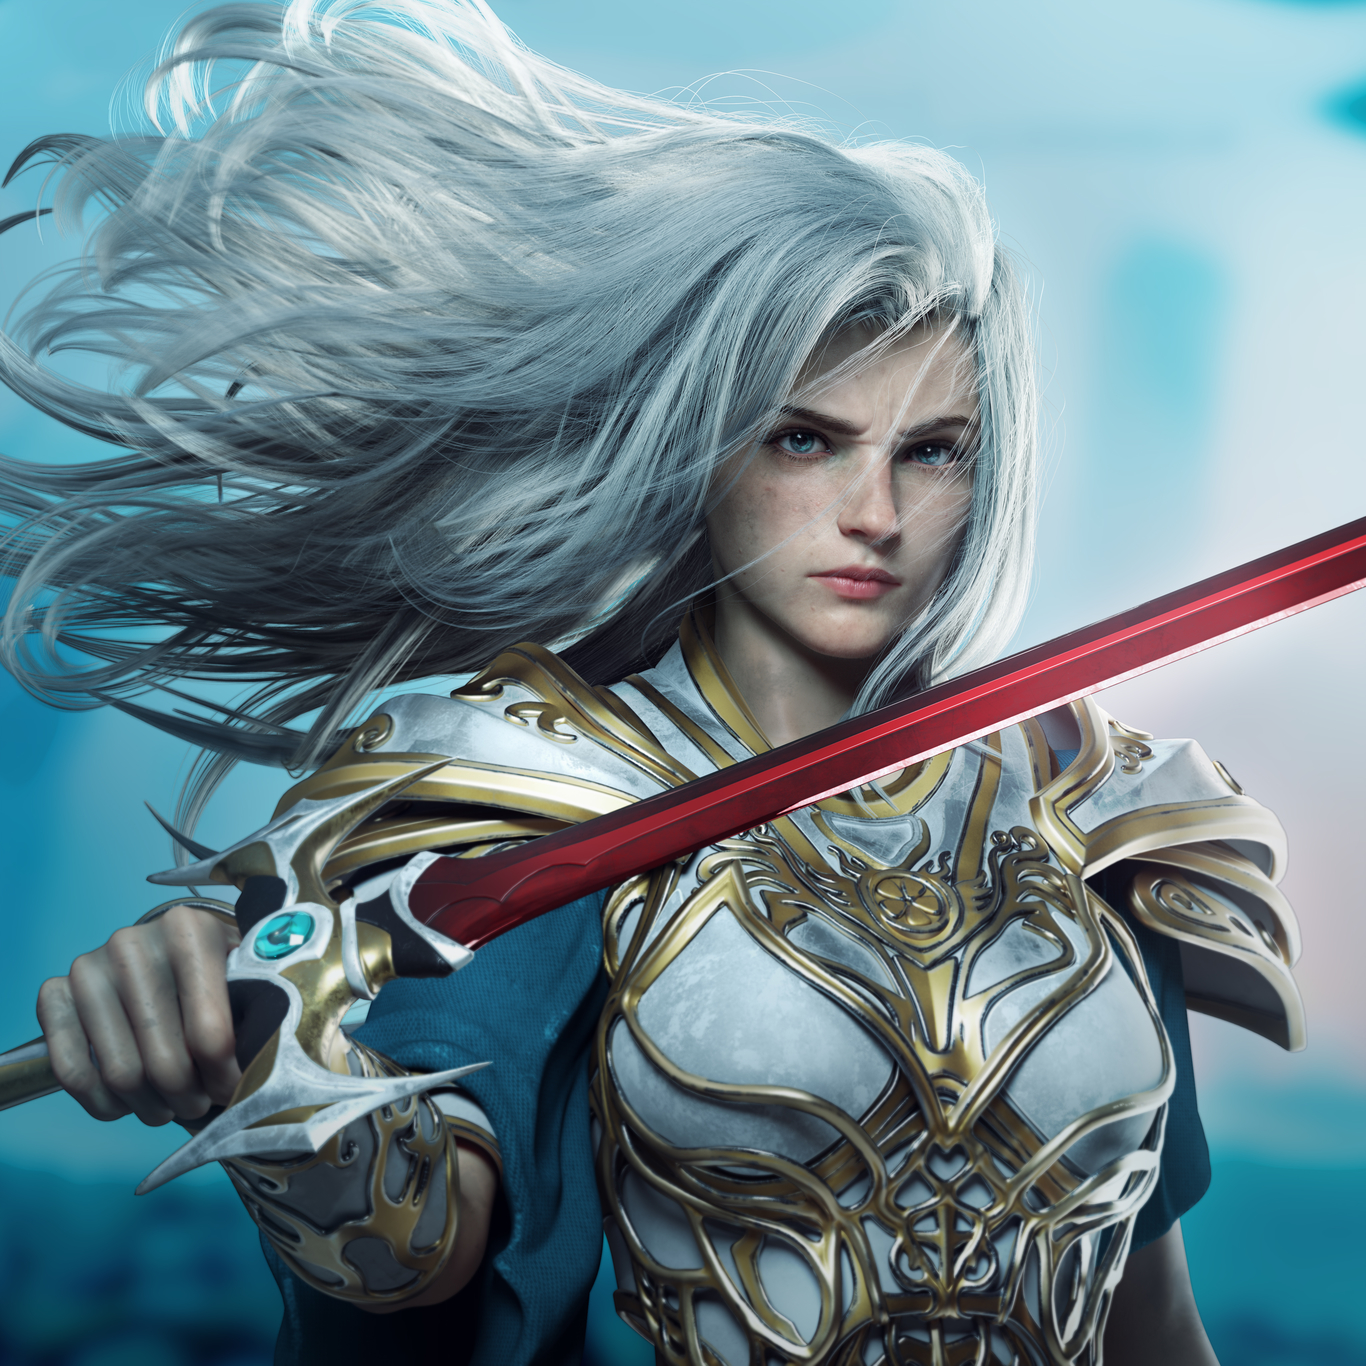 General 1366x1366 CGI digital art fantasy girl sword white hair looking at viewer